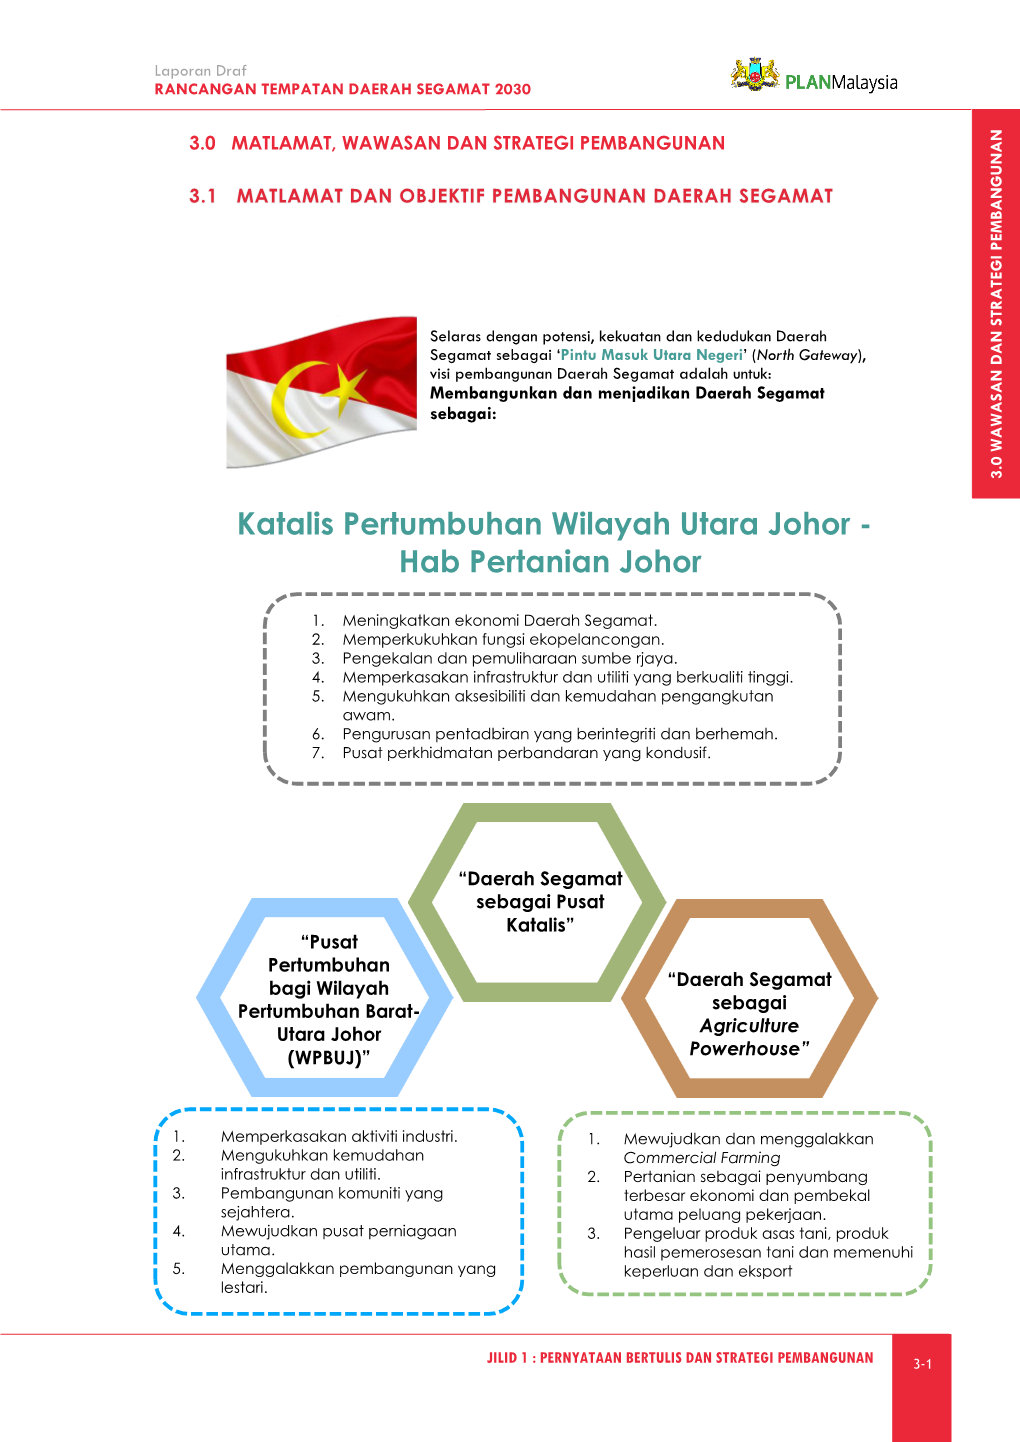 Katalis Pertumbuhan Wilayah Utara Johor - Hab Pertanian Johor